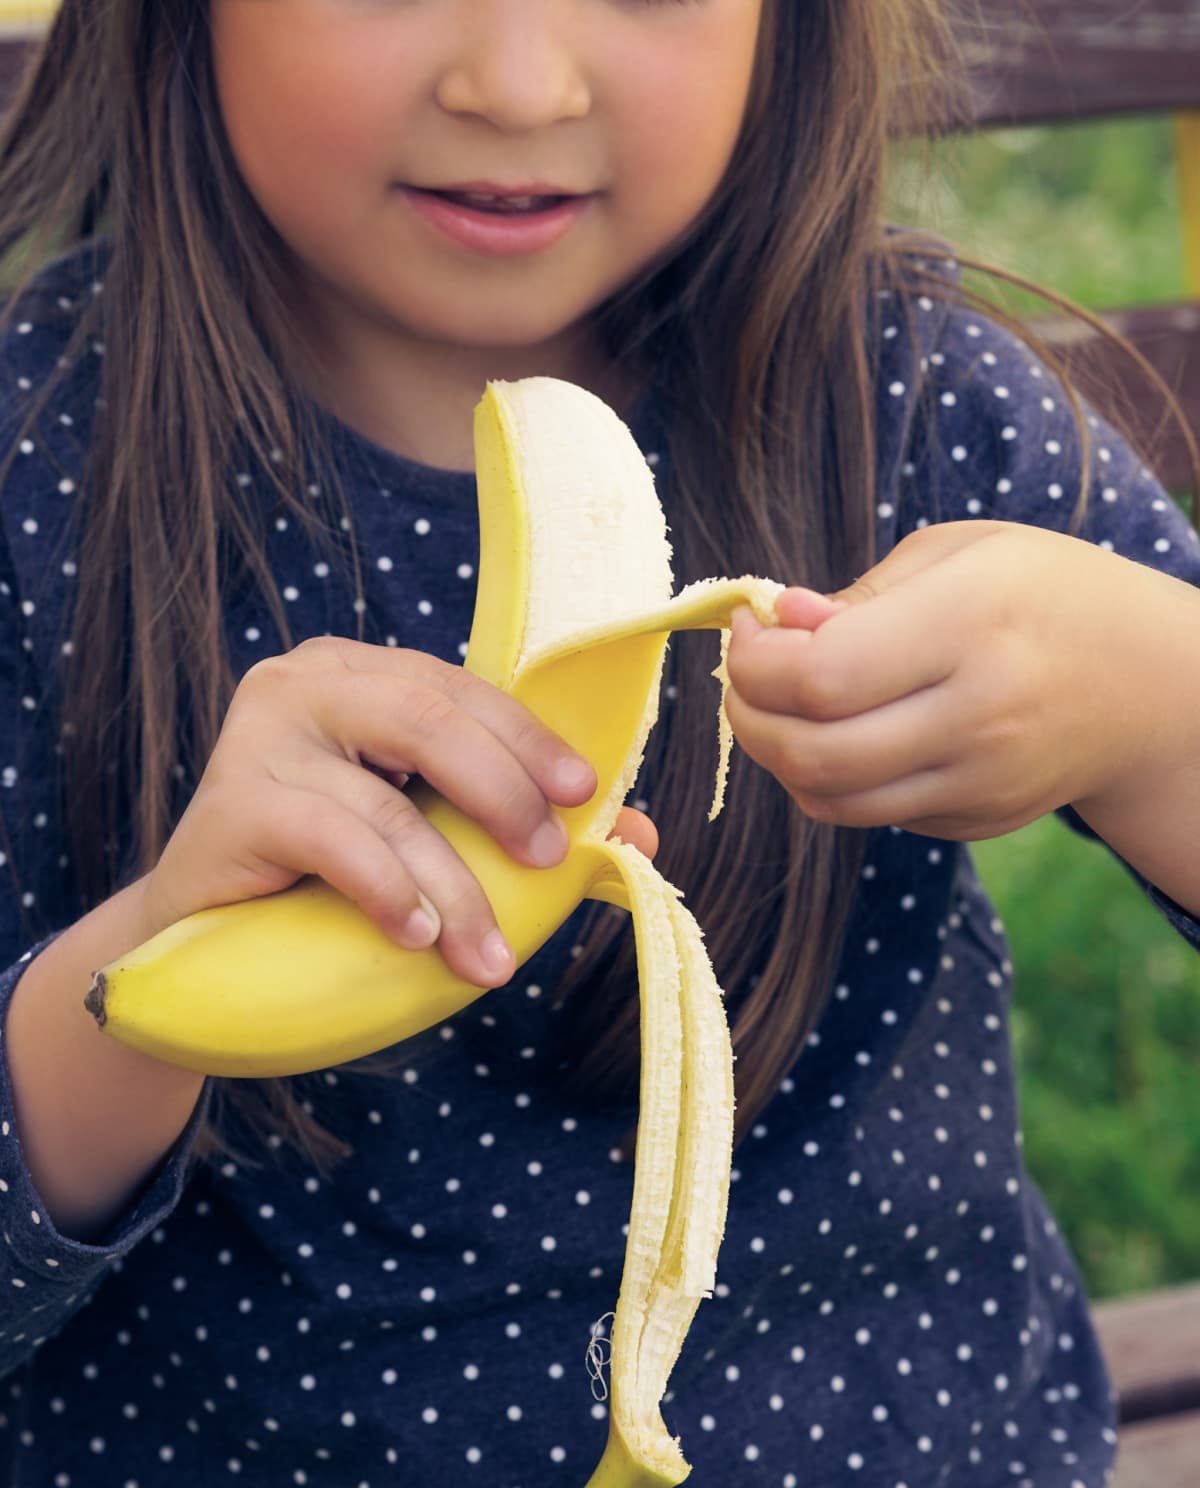 Healthy little girl eating banana. Happy kid enjoy eating fresh fruit.